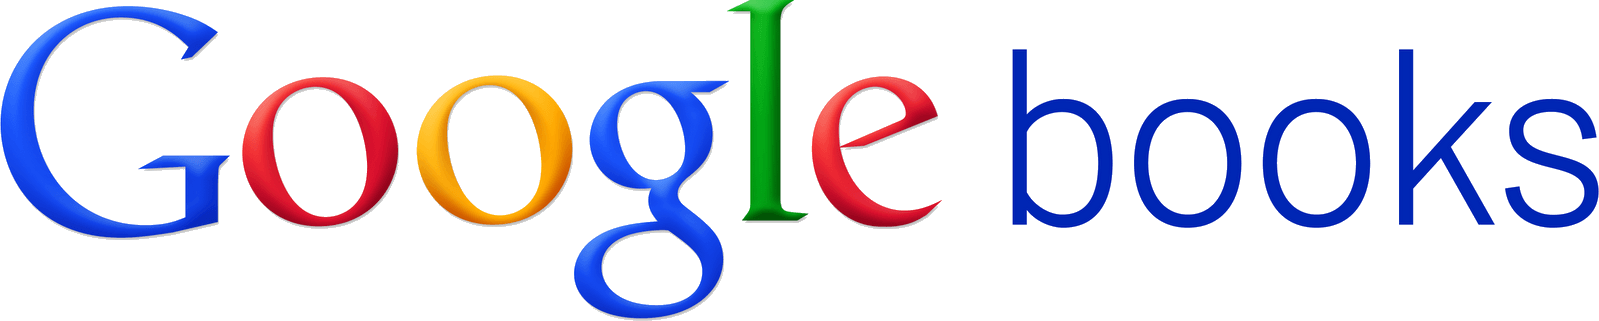 Google Books Logo - Google Books